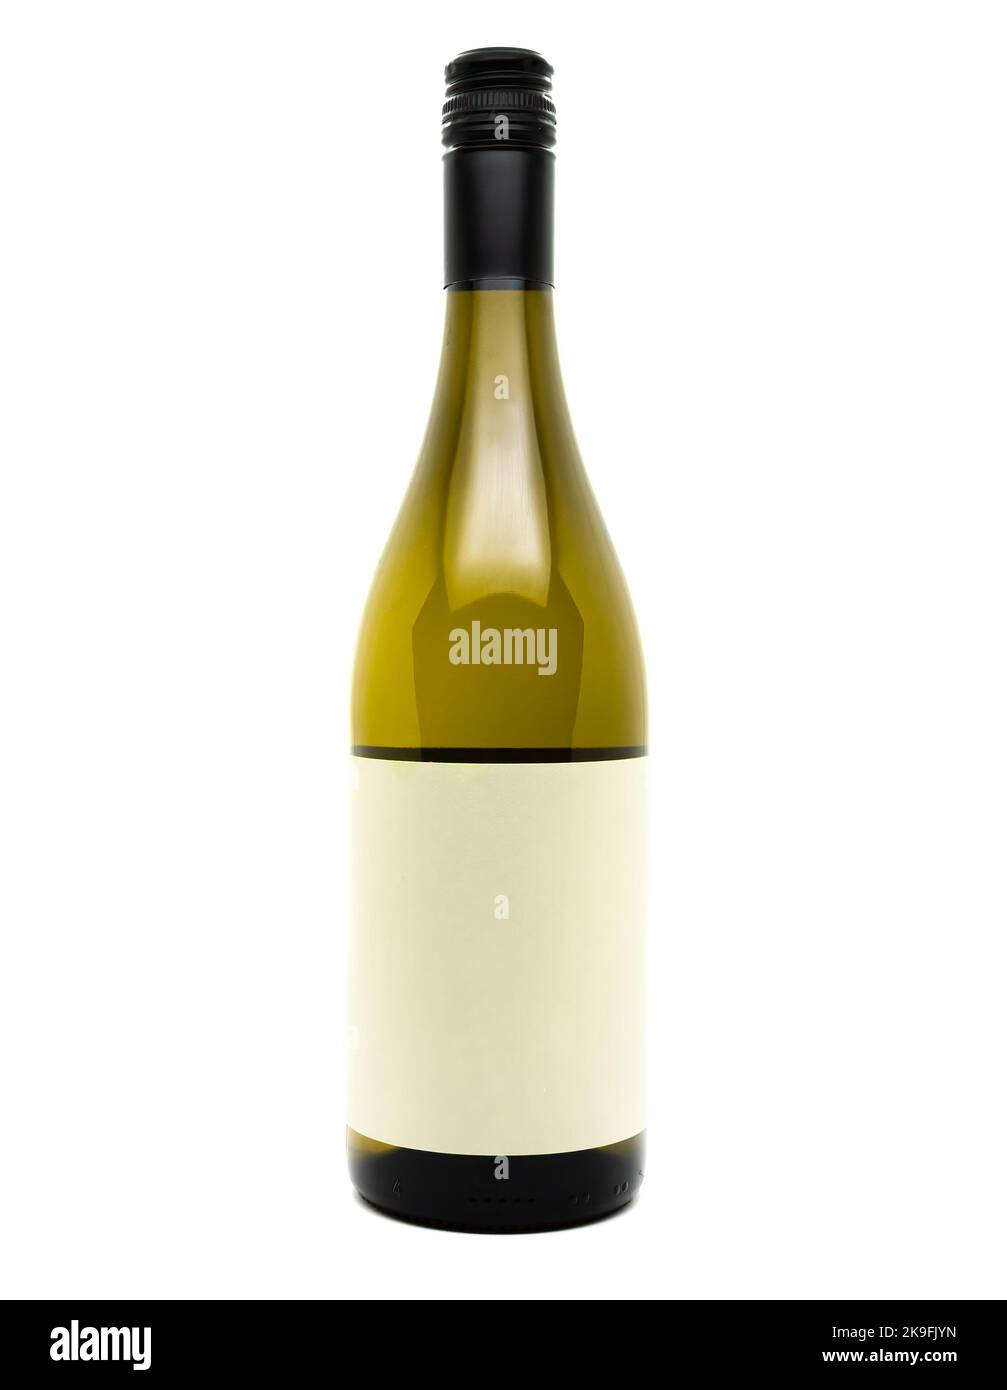 White wine bottle mockup with blank labels, isolated on white background. Stock Photo